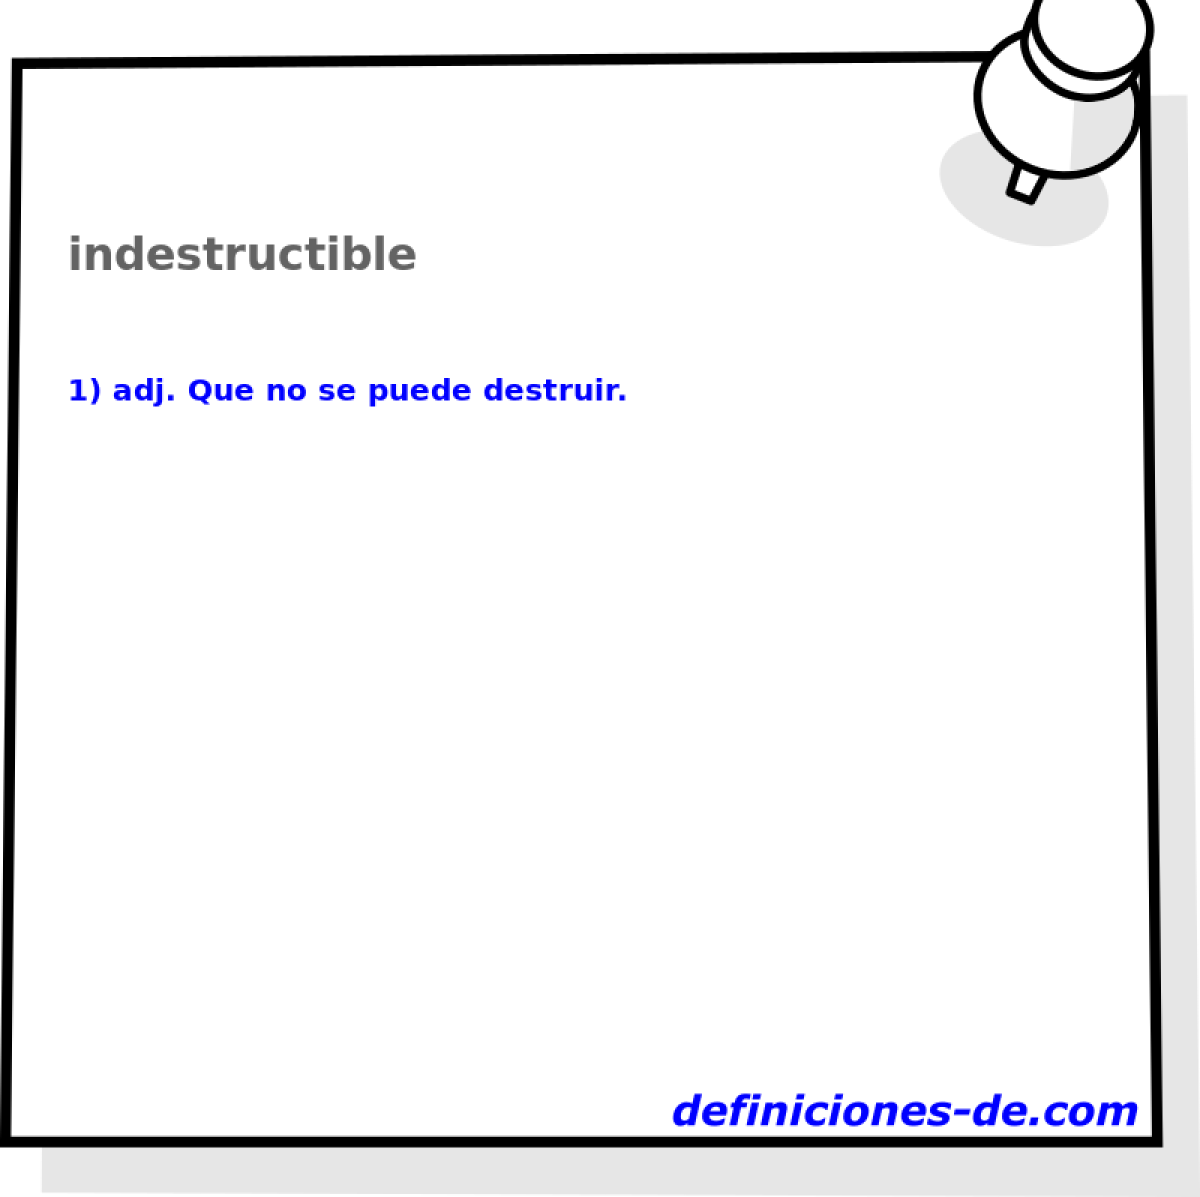 indestructible 